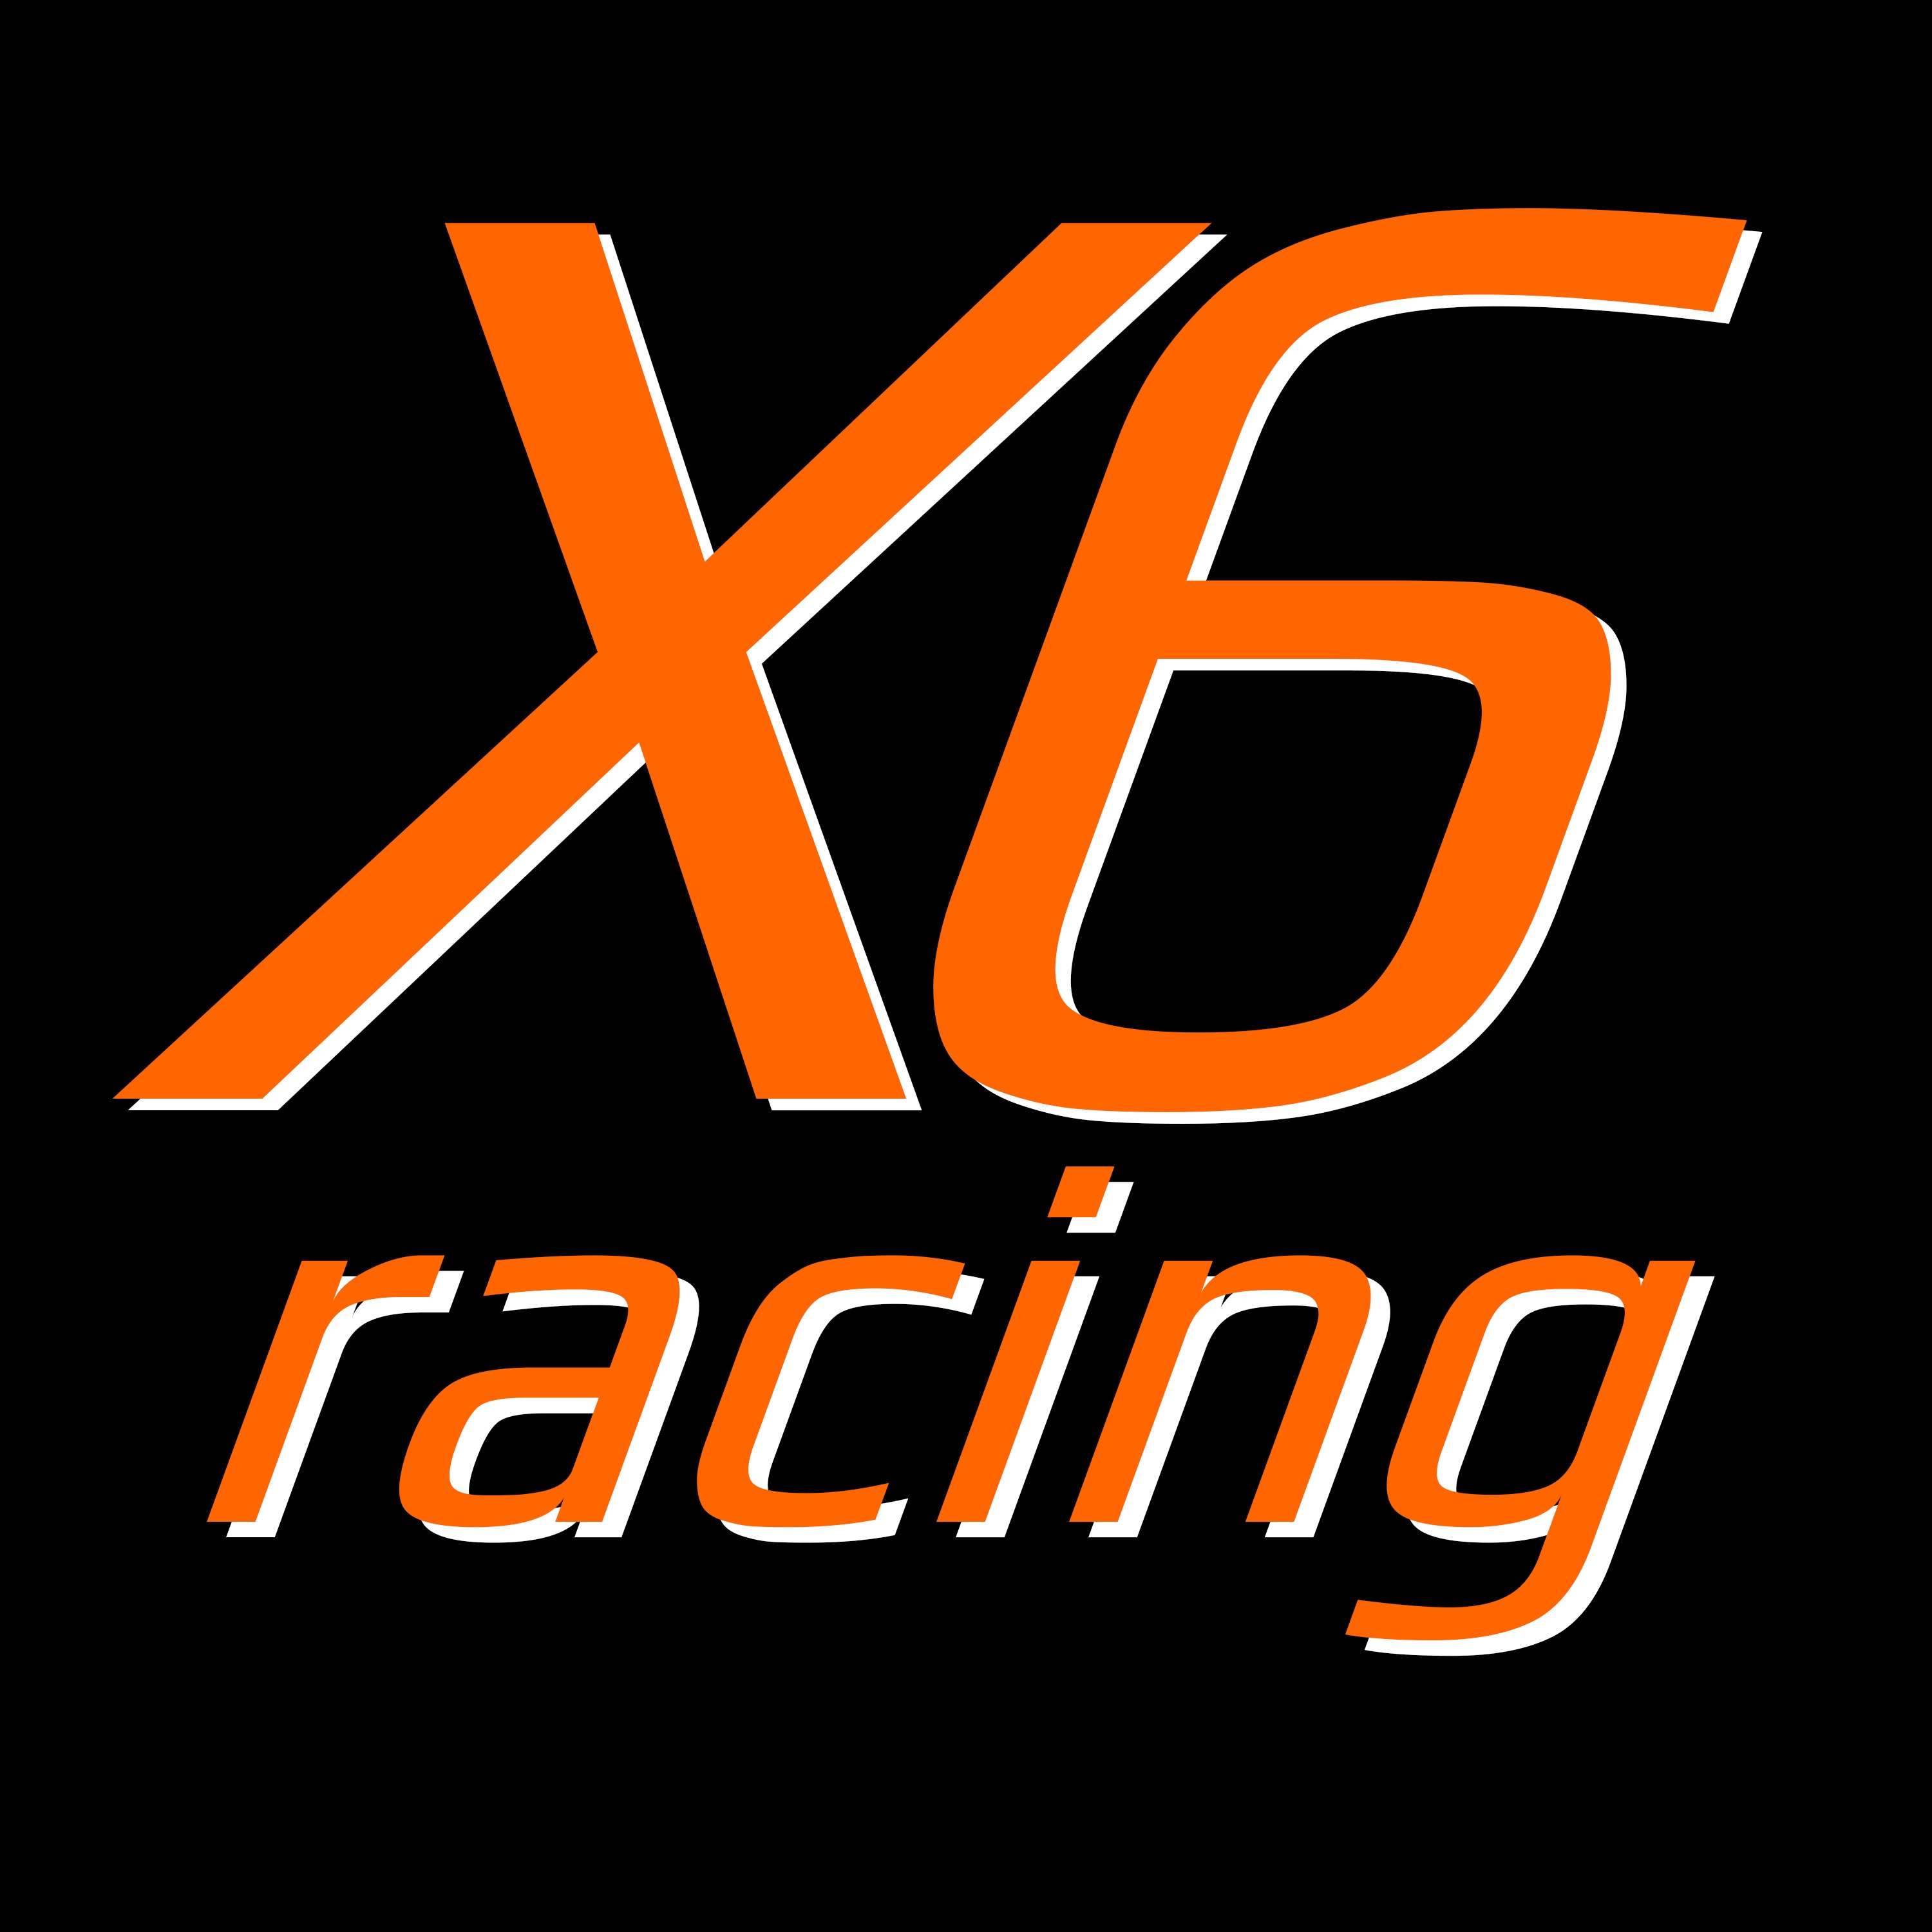 X6 racing podcast